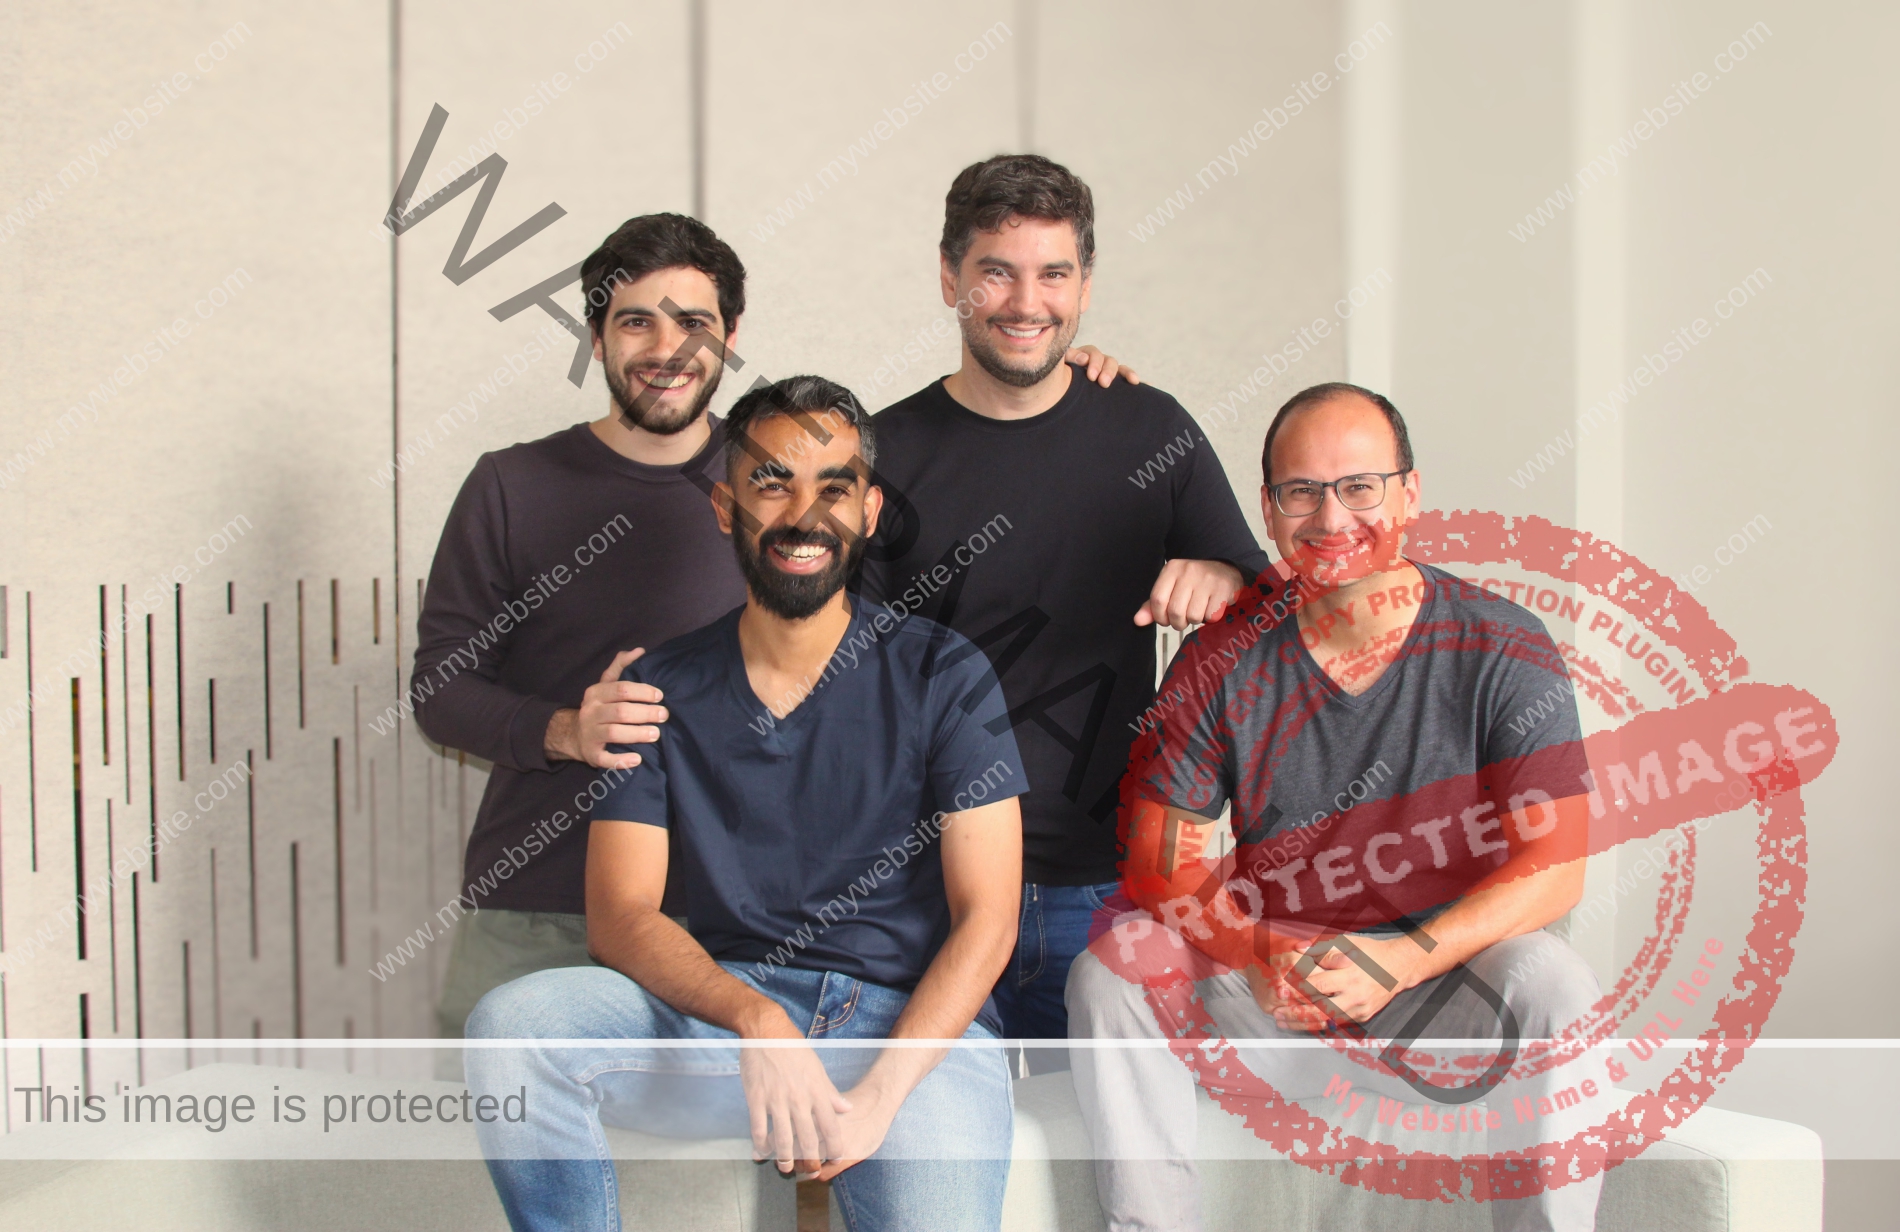 Hyperplane Founders Felipe Meneses, Rohan Ramanath, Felipe Lamounier and Daniel Silva